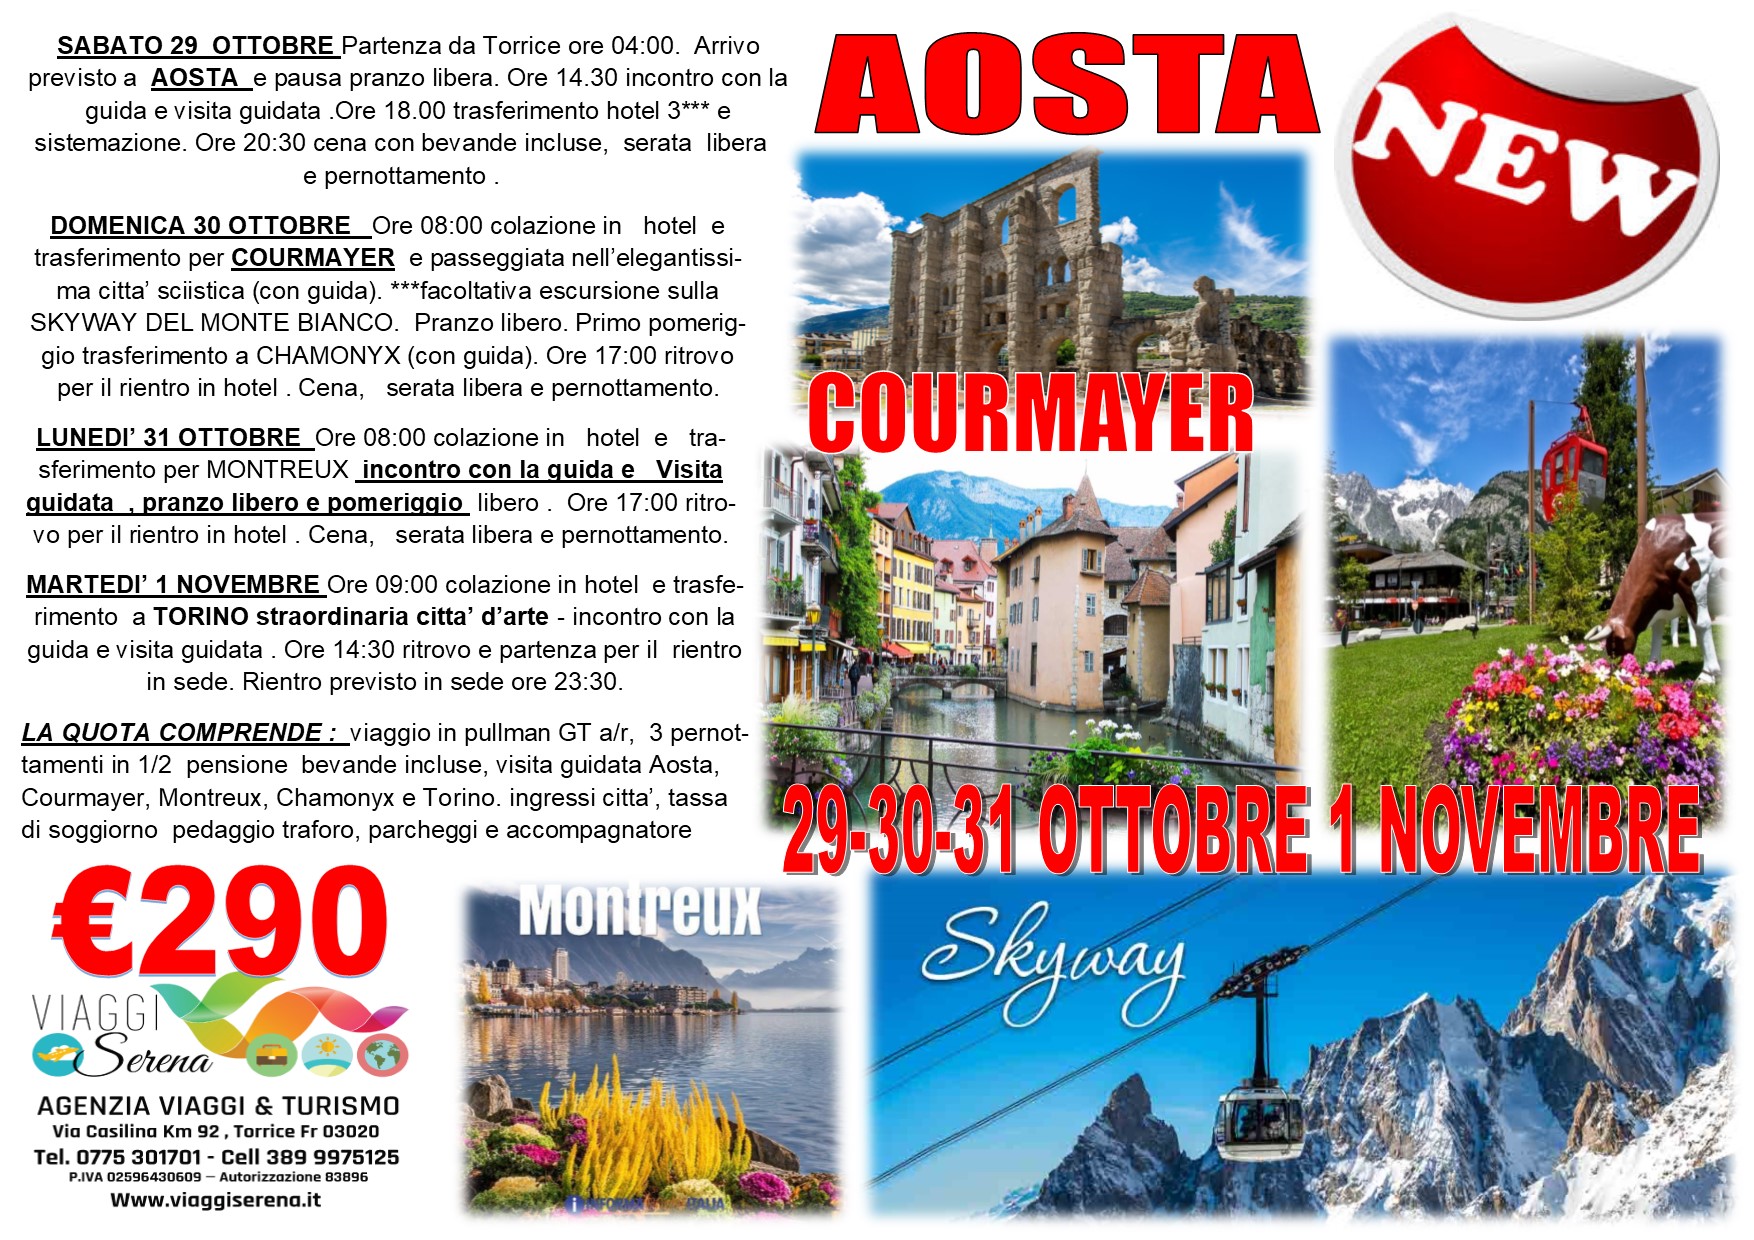 Viaggi di Gruppo: Aosta, Courmayer, Montreux & Chamonyx 29-30-31 Ottobre 1 Novembre € 290,00